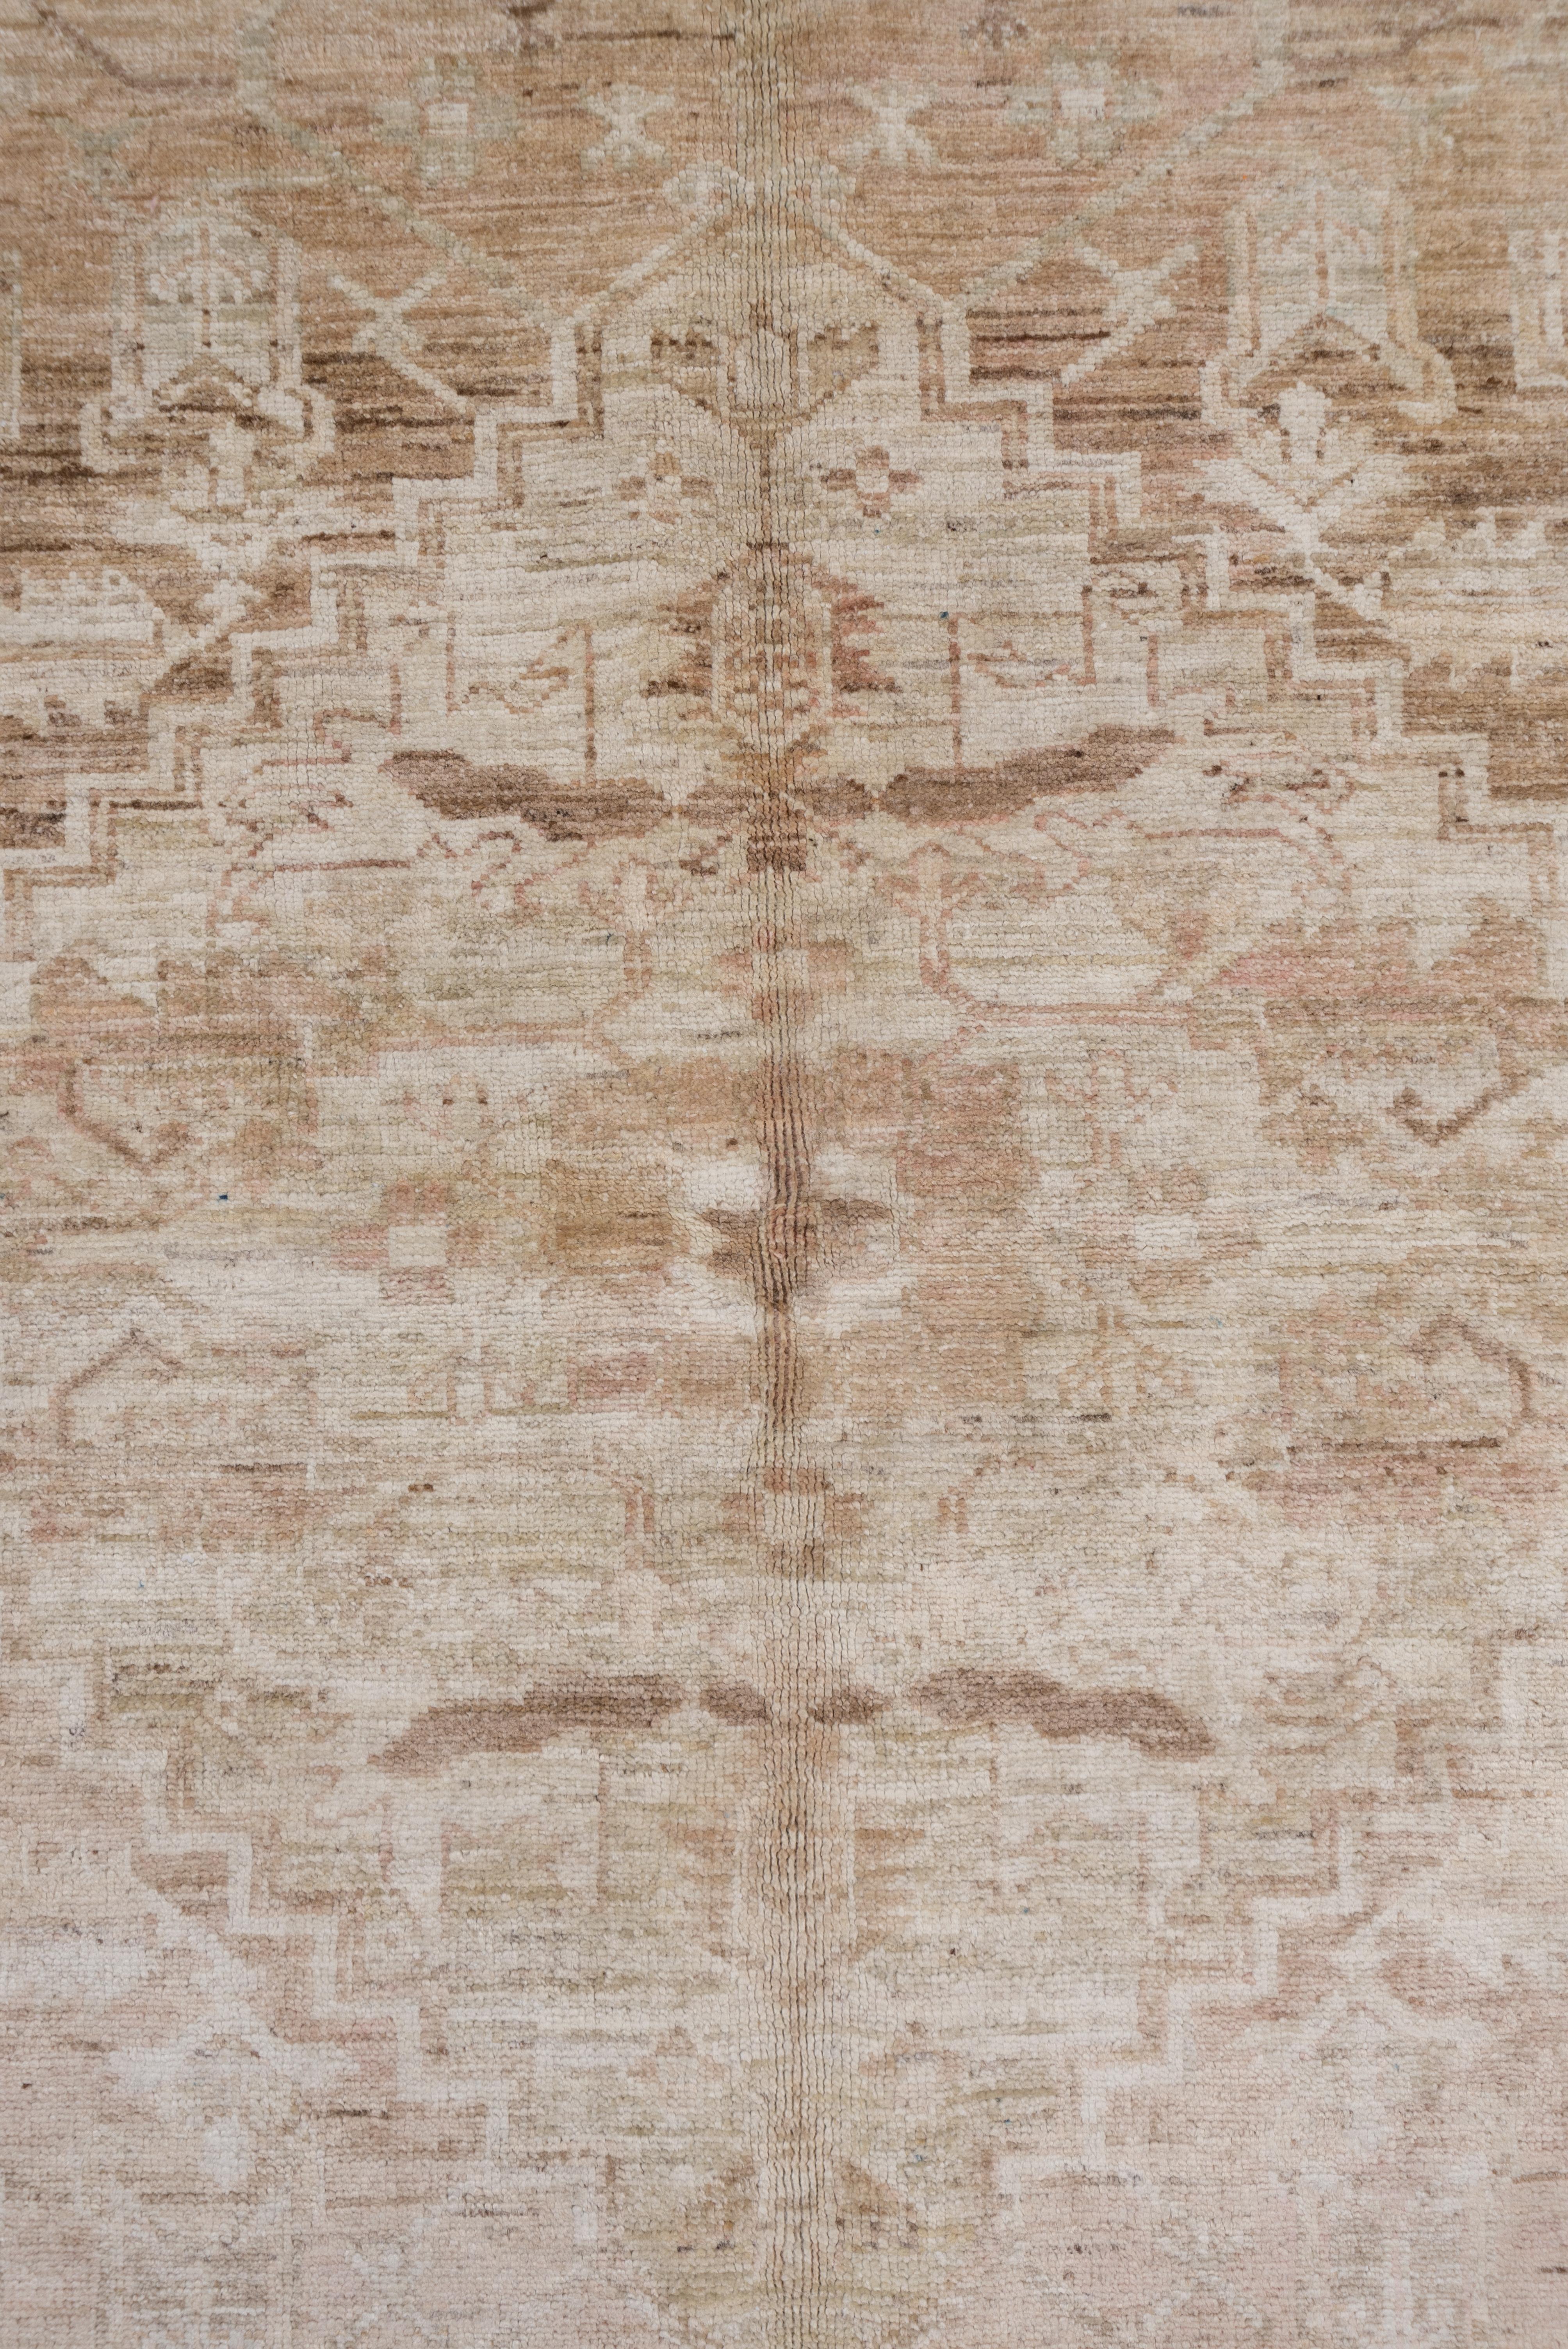 Contemporary Neutral Persian Heriz Carpet For Sale